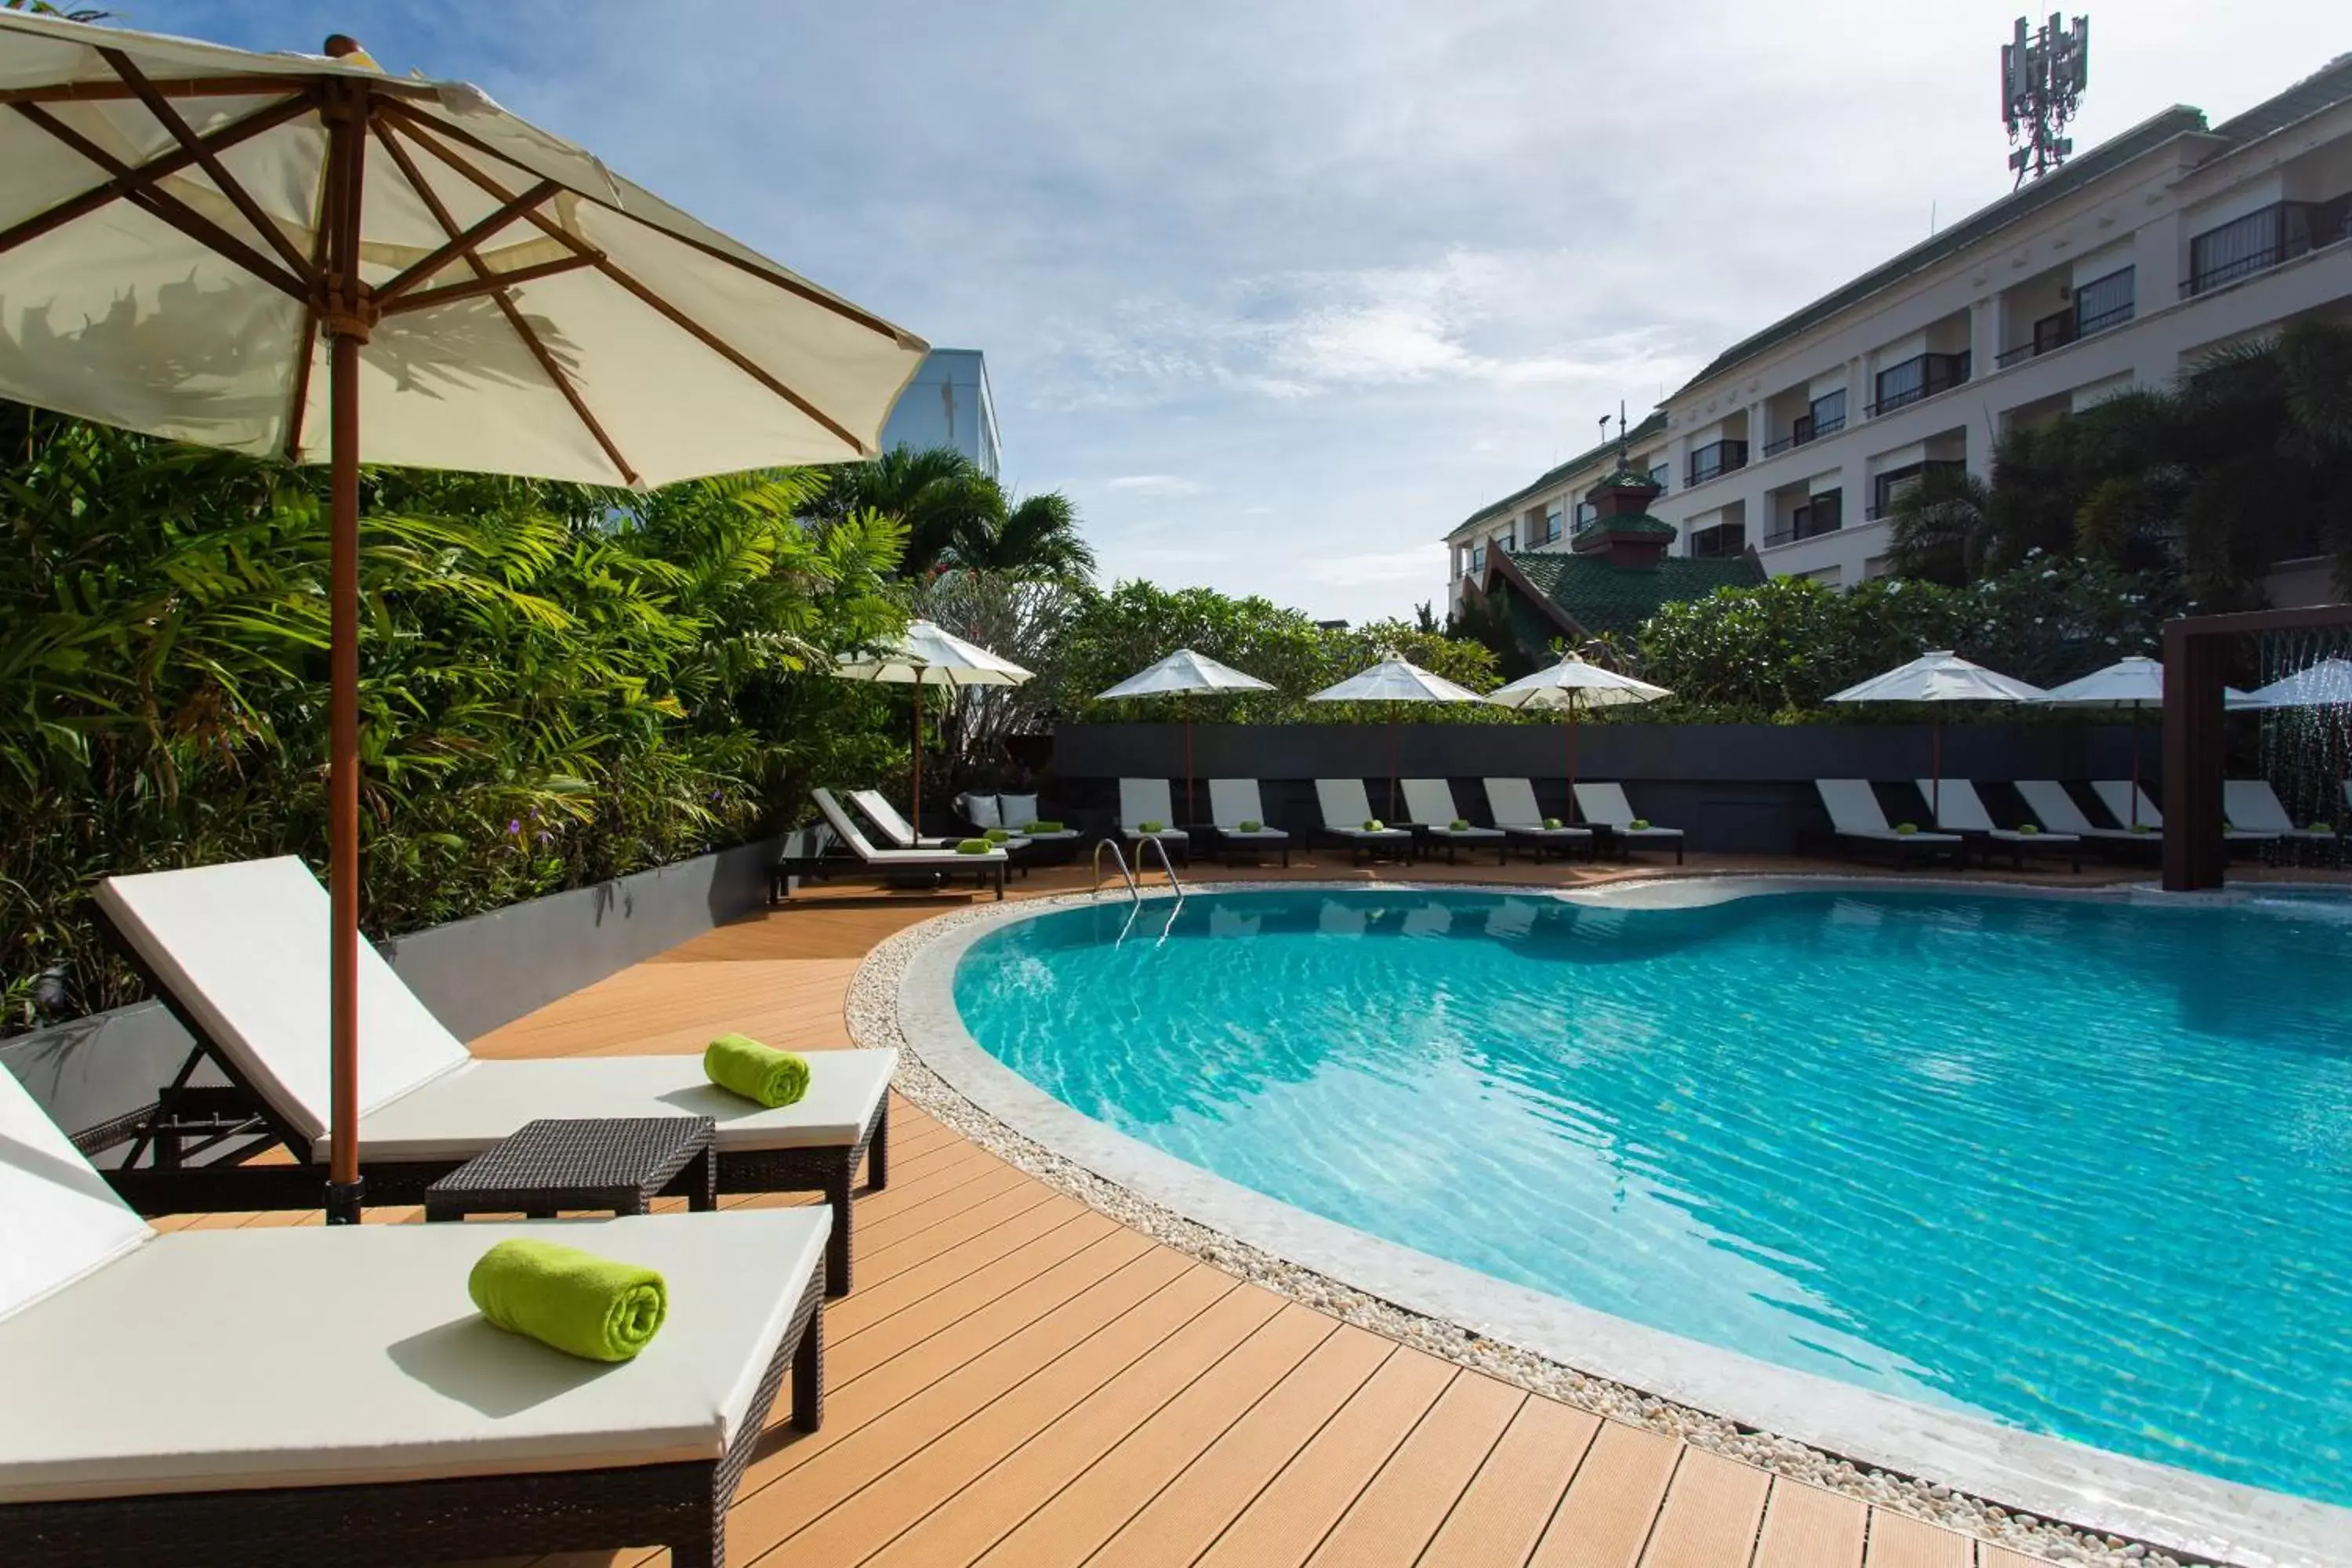 Swimming Pool in Krabi Heritage Hotel - SHA Extra Plus